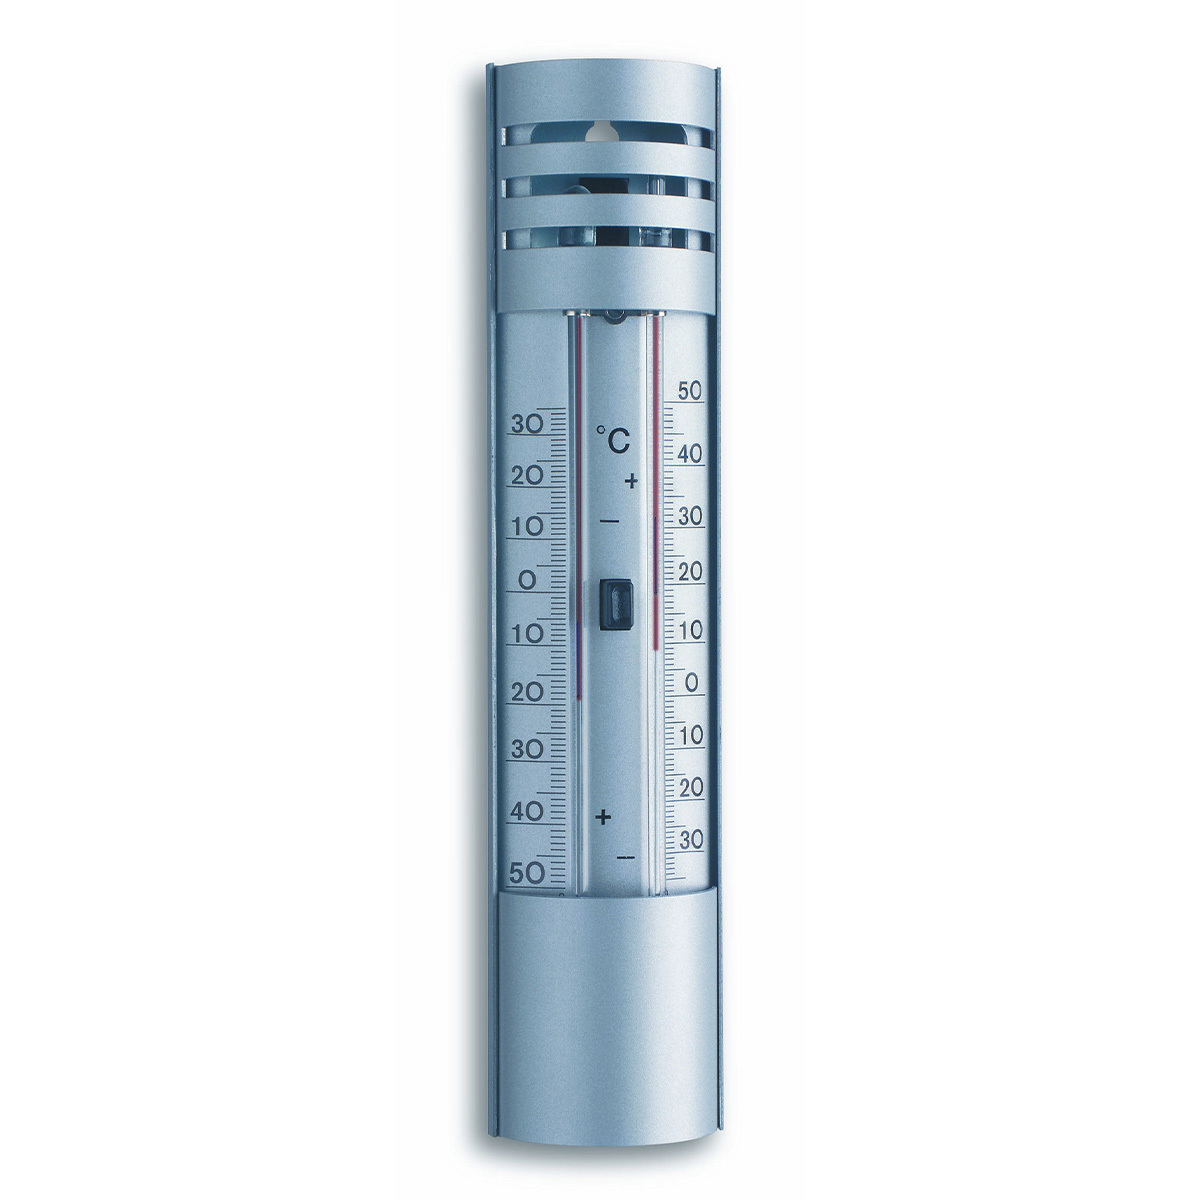 10-2007-analoges-minima-maxima-thermometer-aluminium-1200x1200px.jpg